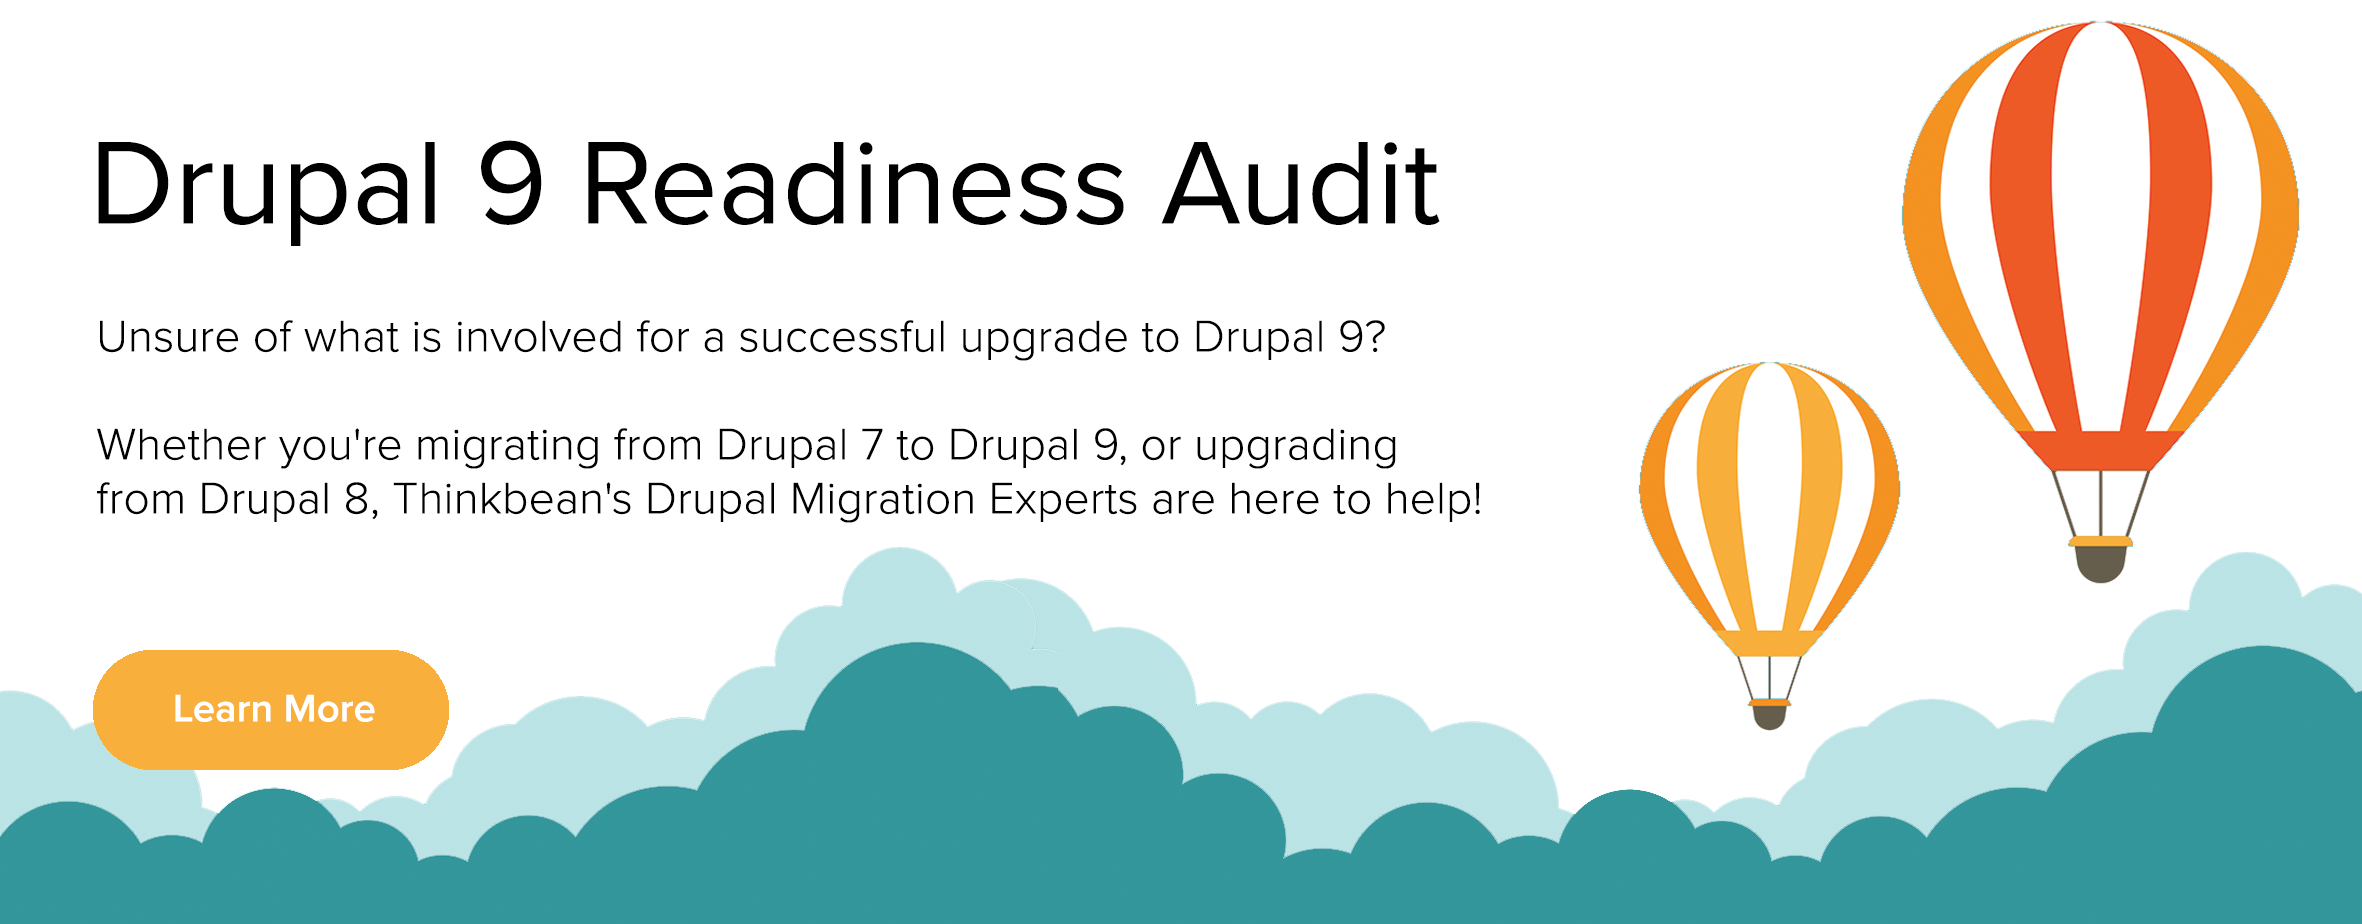 Drupal 9 Readiness Audit CTA